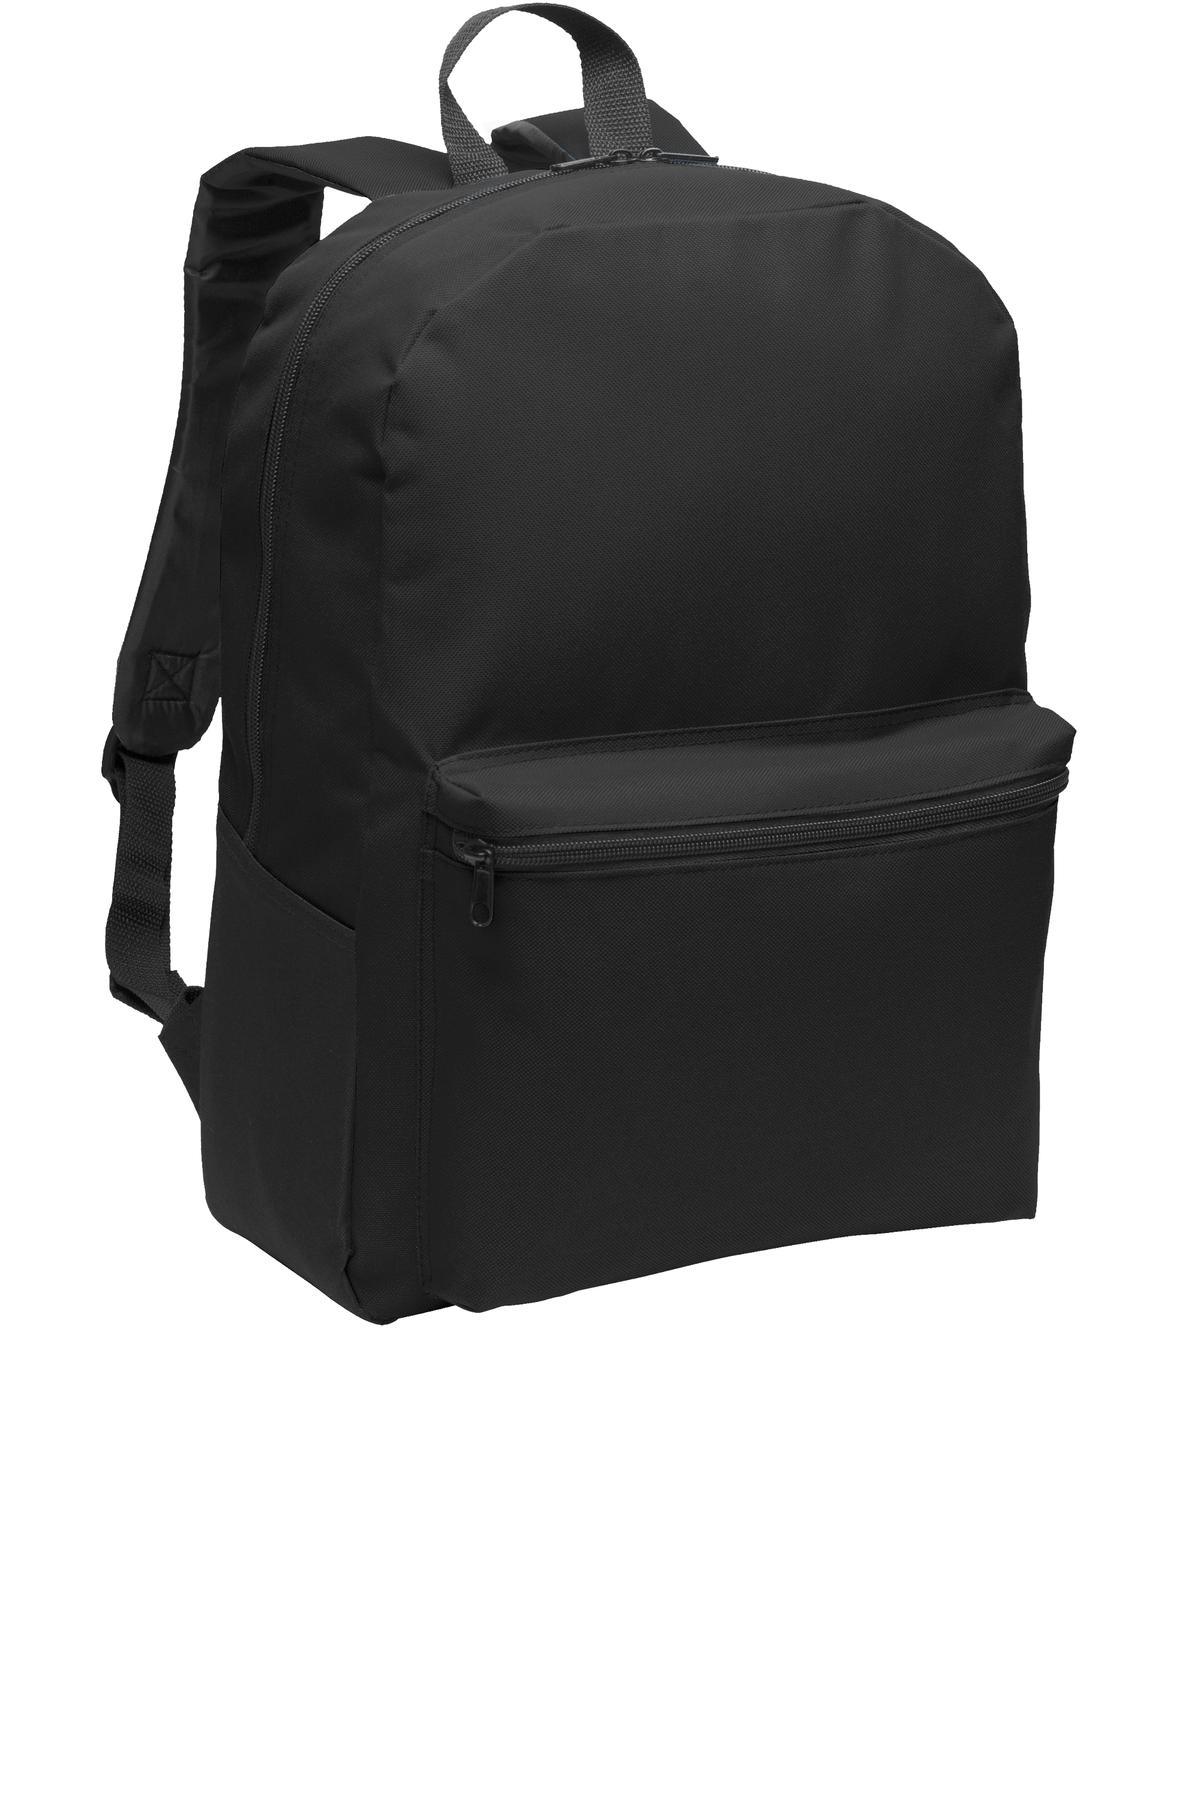 Port Authority Value Backpack. BG203 - Dresses Max